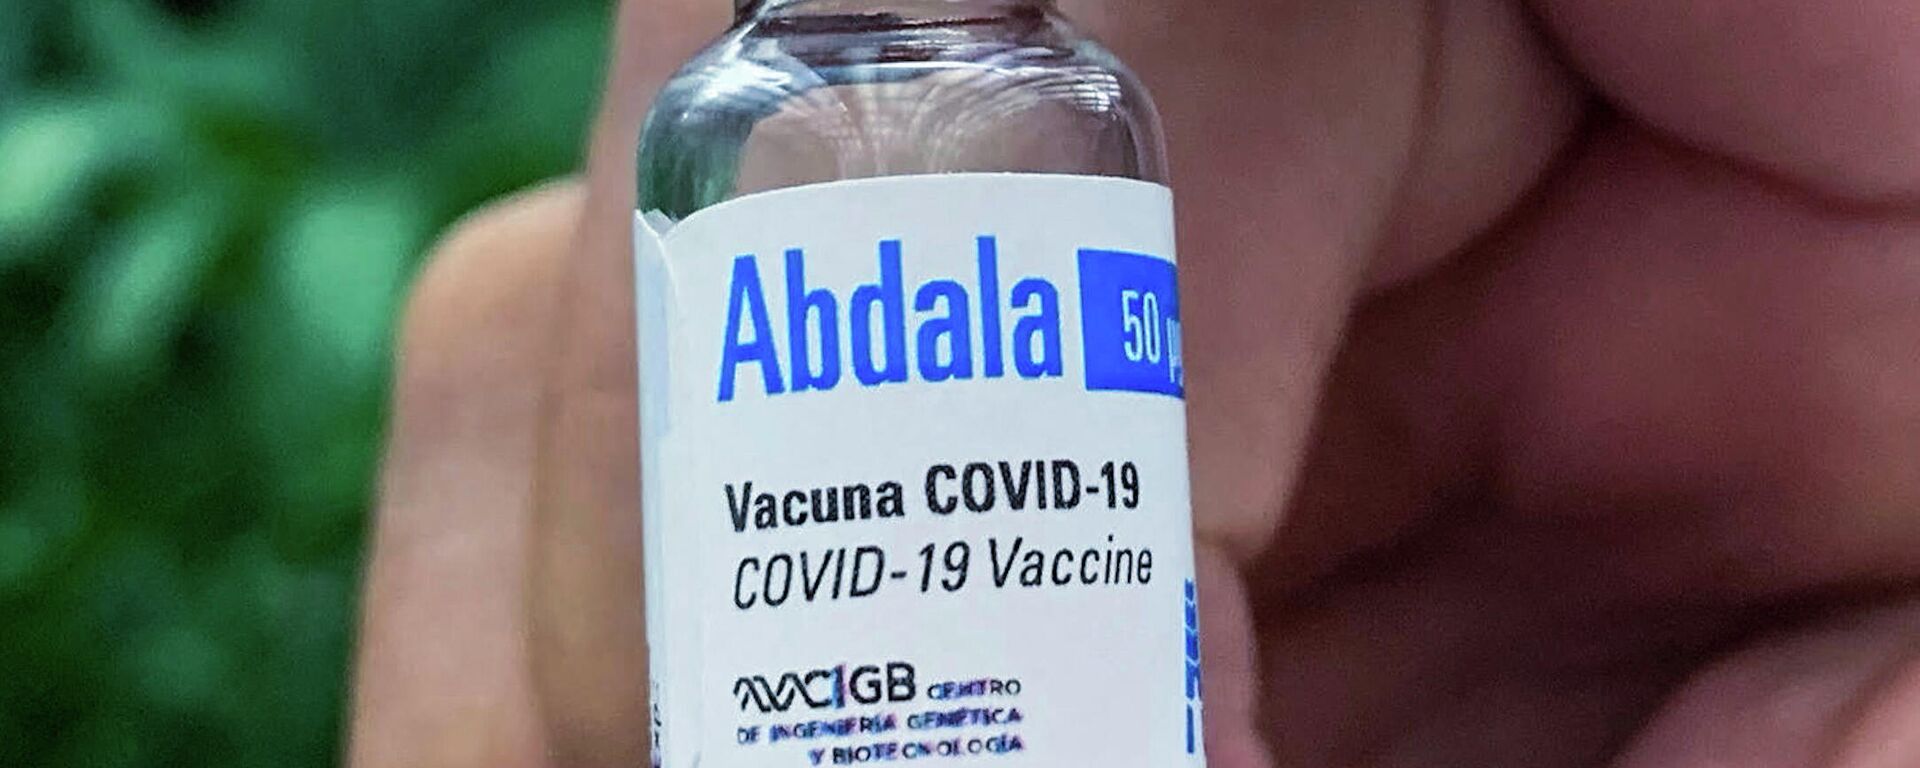 Vacuna cubana Abdala contra COVID-19 - Sputnik Mundo, 1920, 31.12.2021